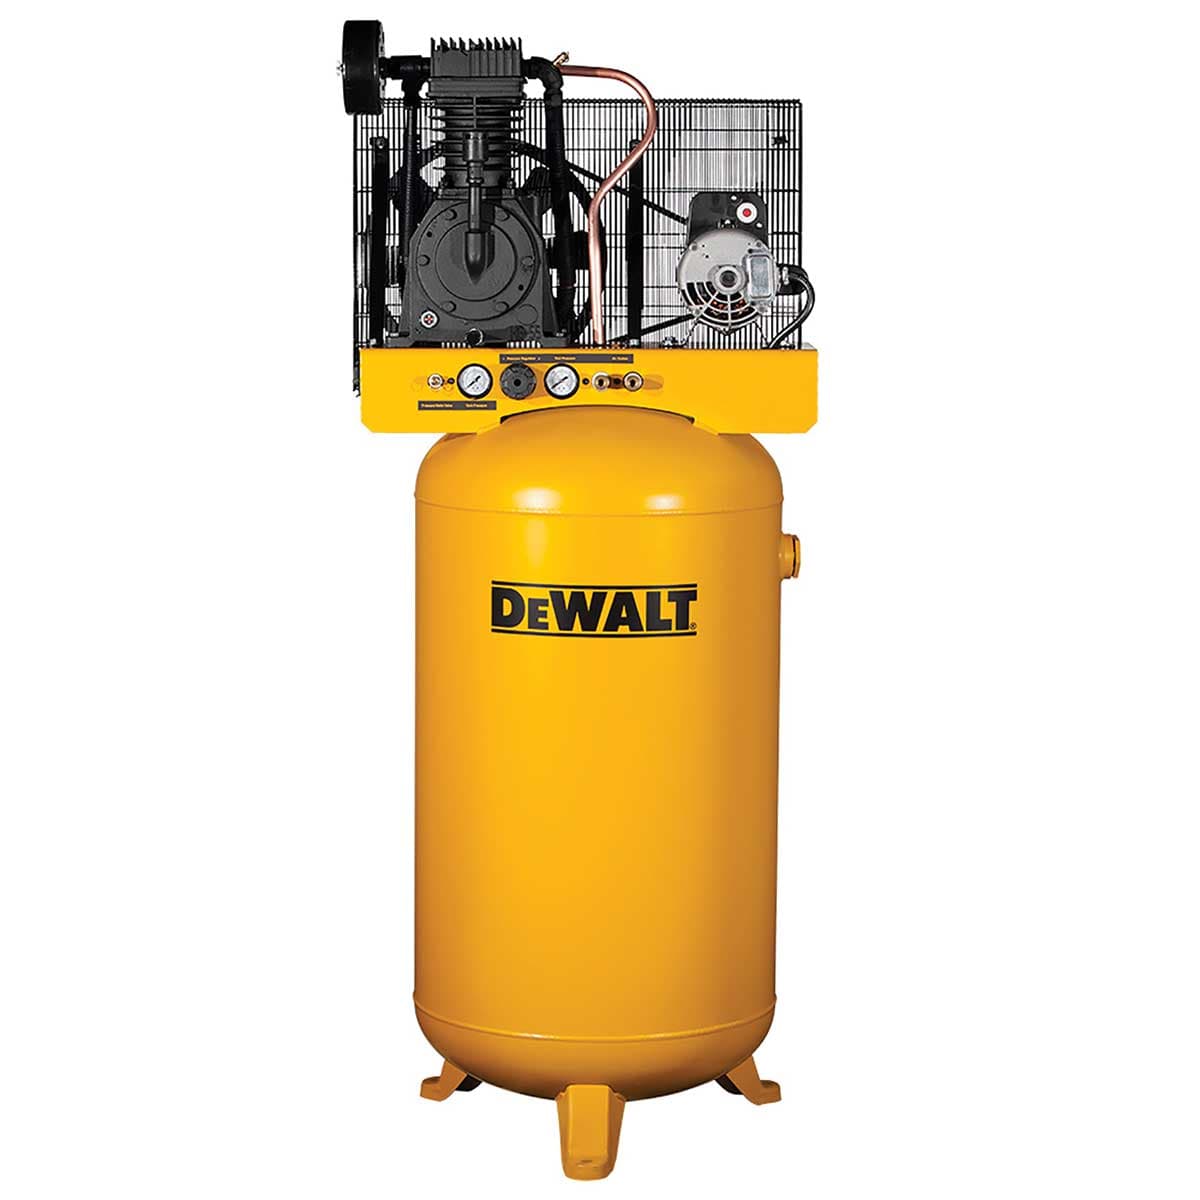 DEWALT 80 Gallon 5 HP Single Phase 230V Two Stage Air Compressor